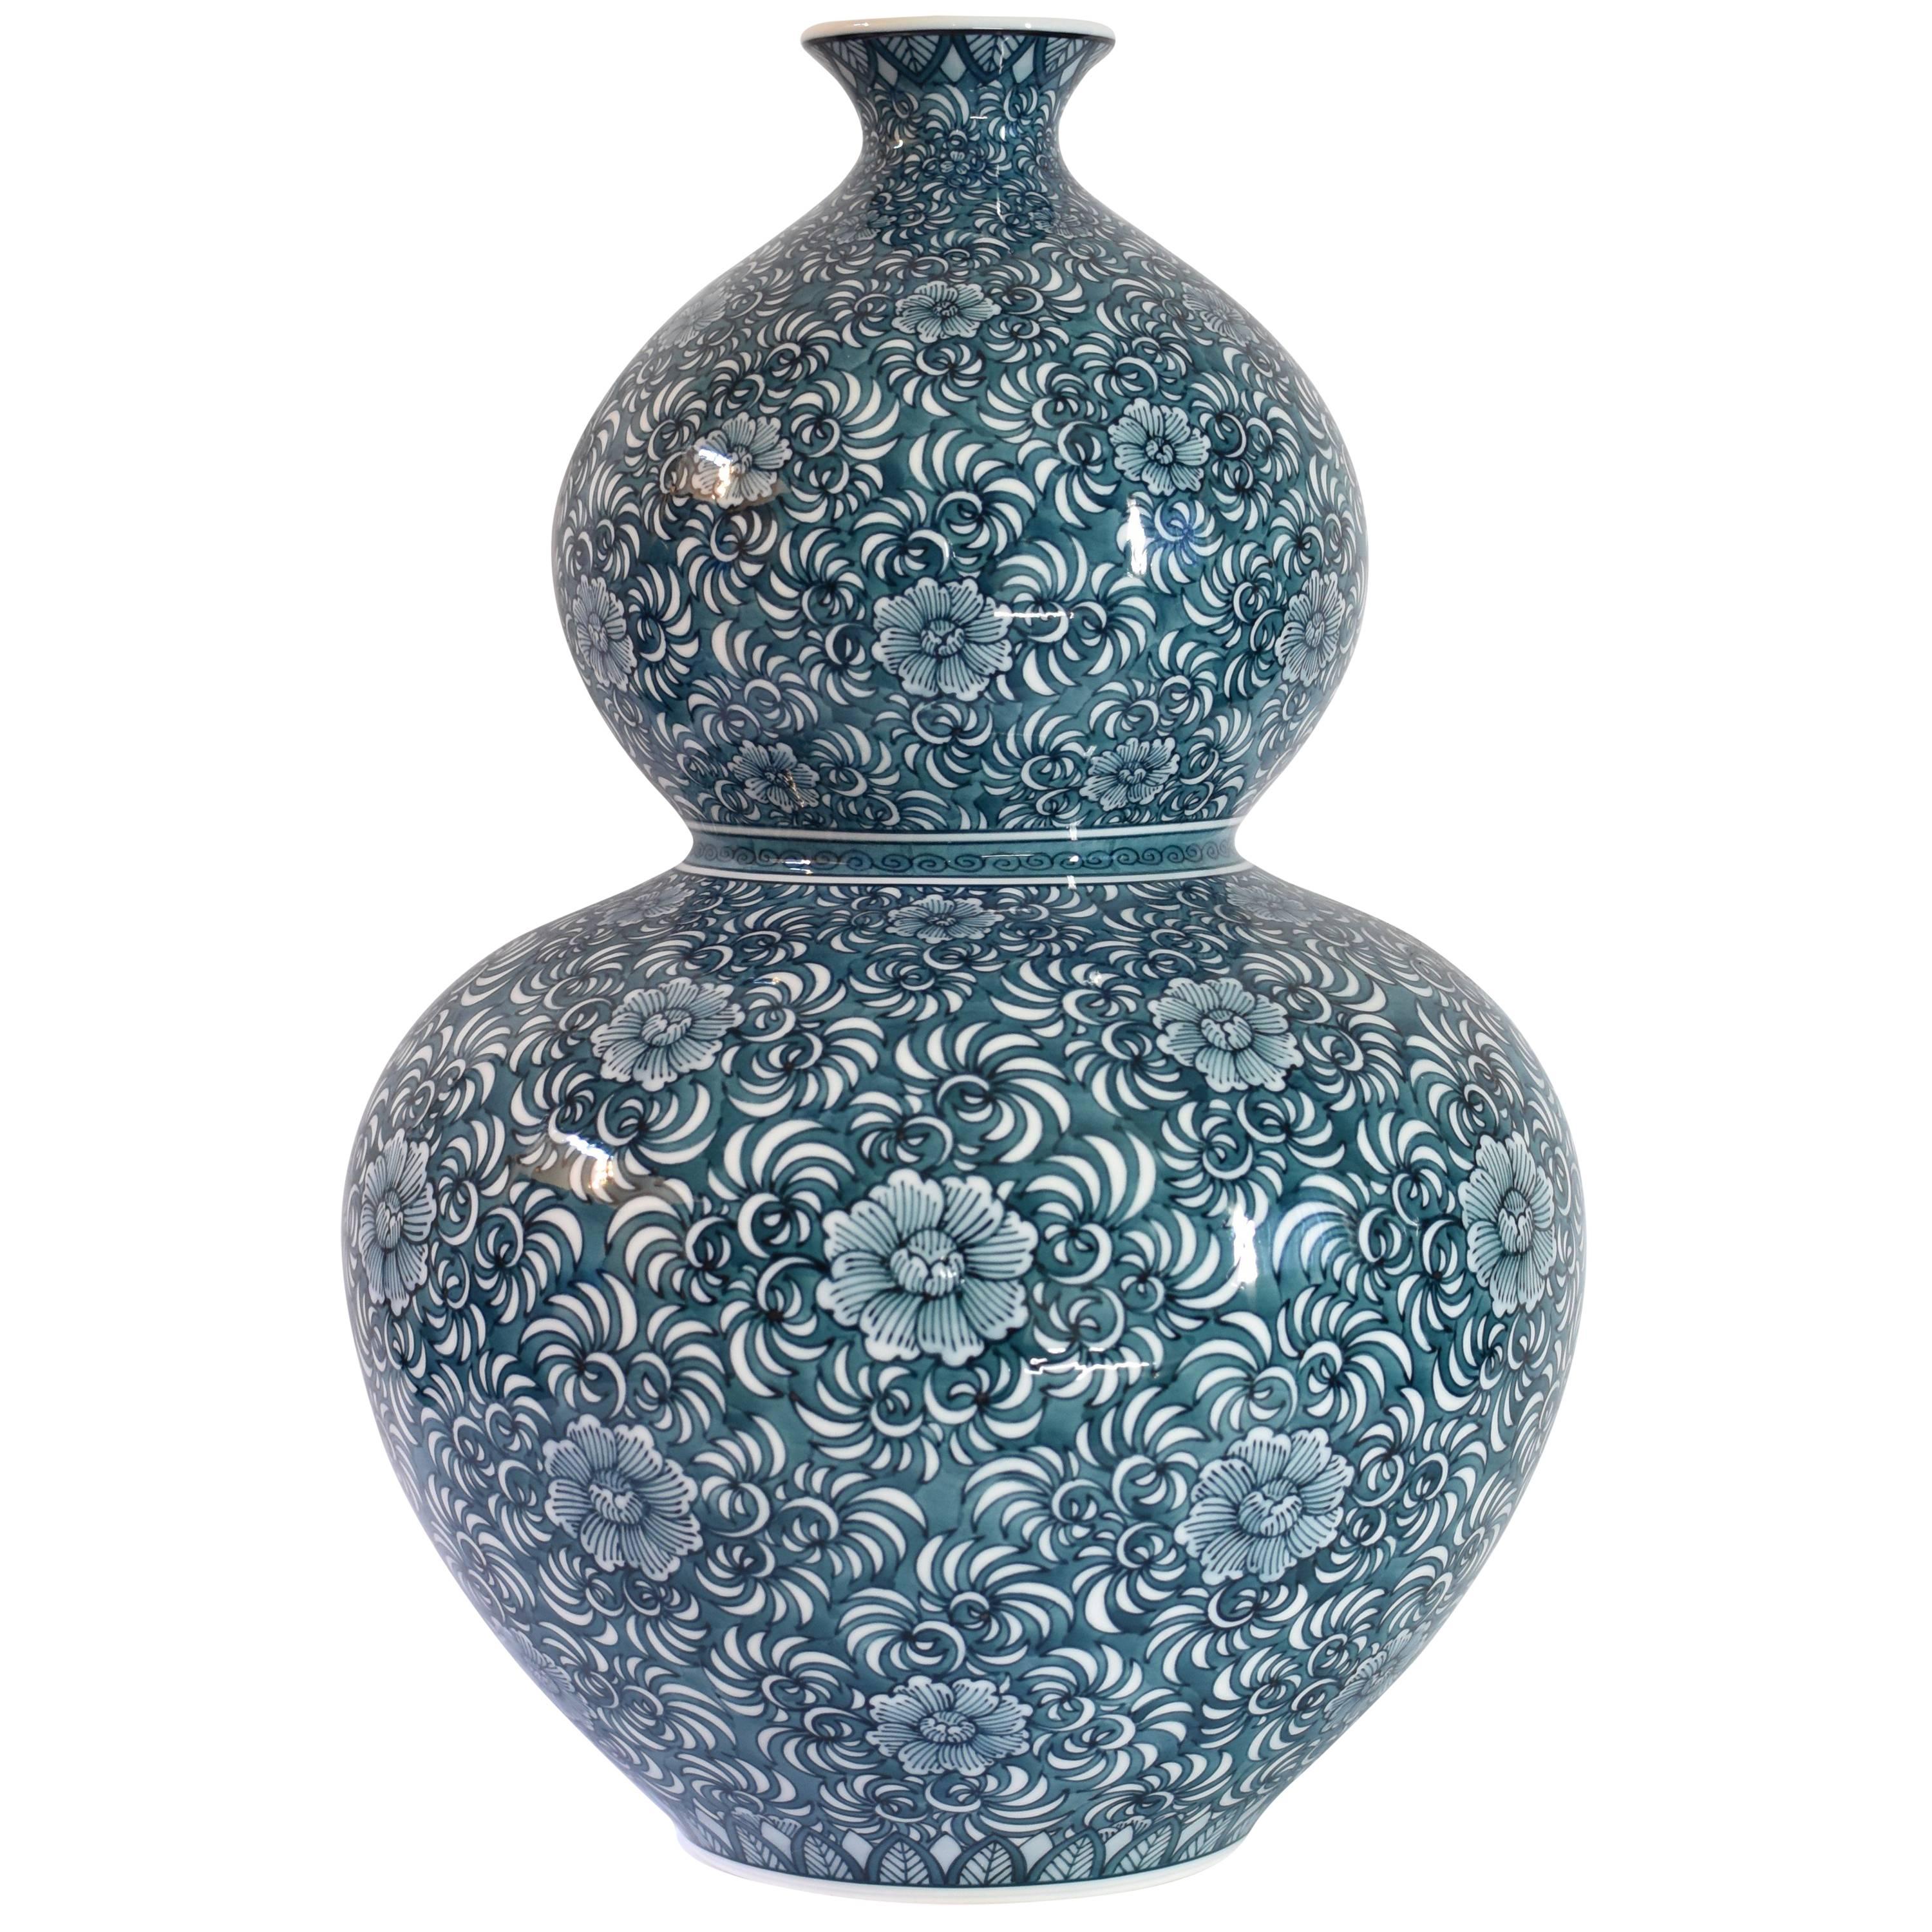 Blue Porcelain Vase by Japanese Master Artist